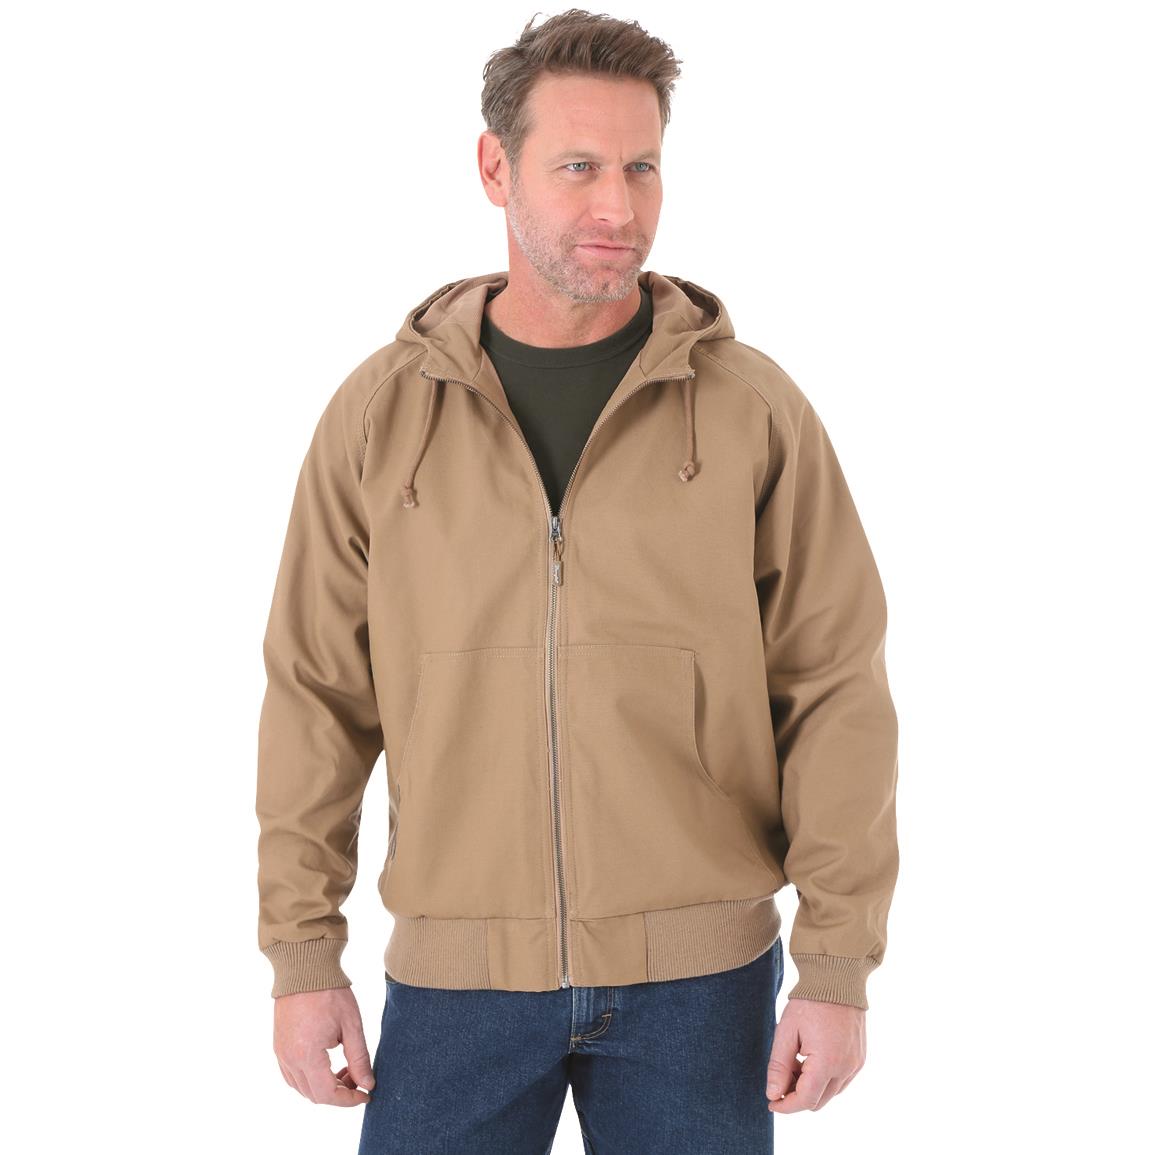 Wrangler RIGGS Workwear Workhorse Jacket - 665399, Jackets, Coats & Rain  Gear at Sportsman's Guide